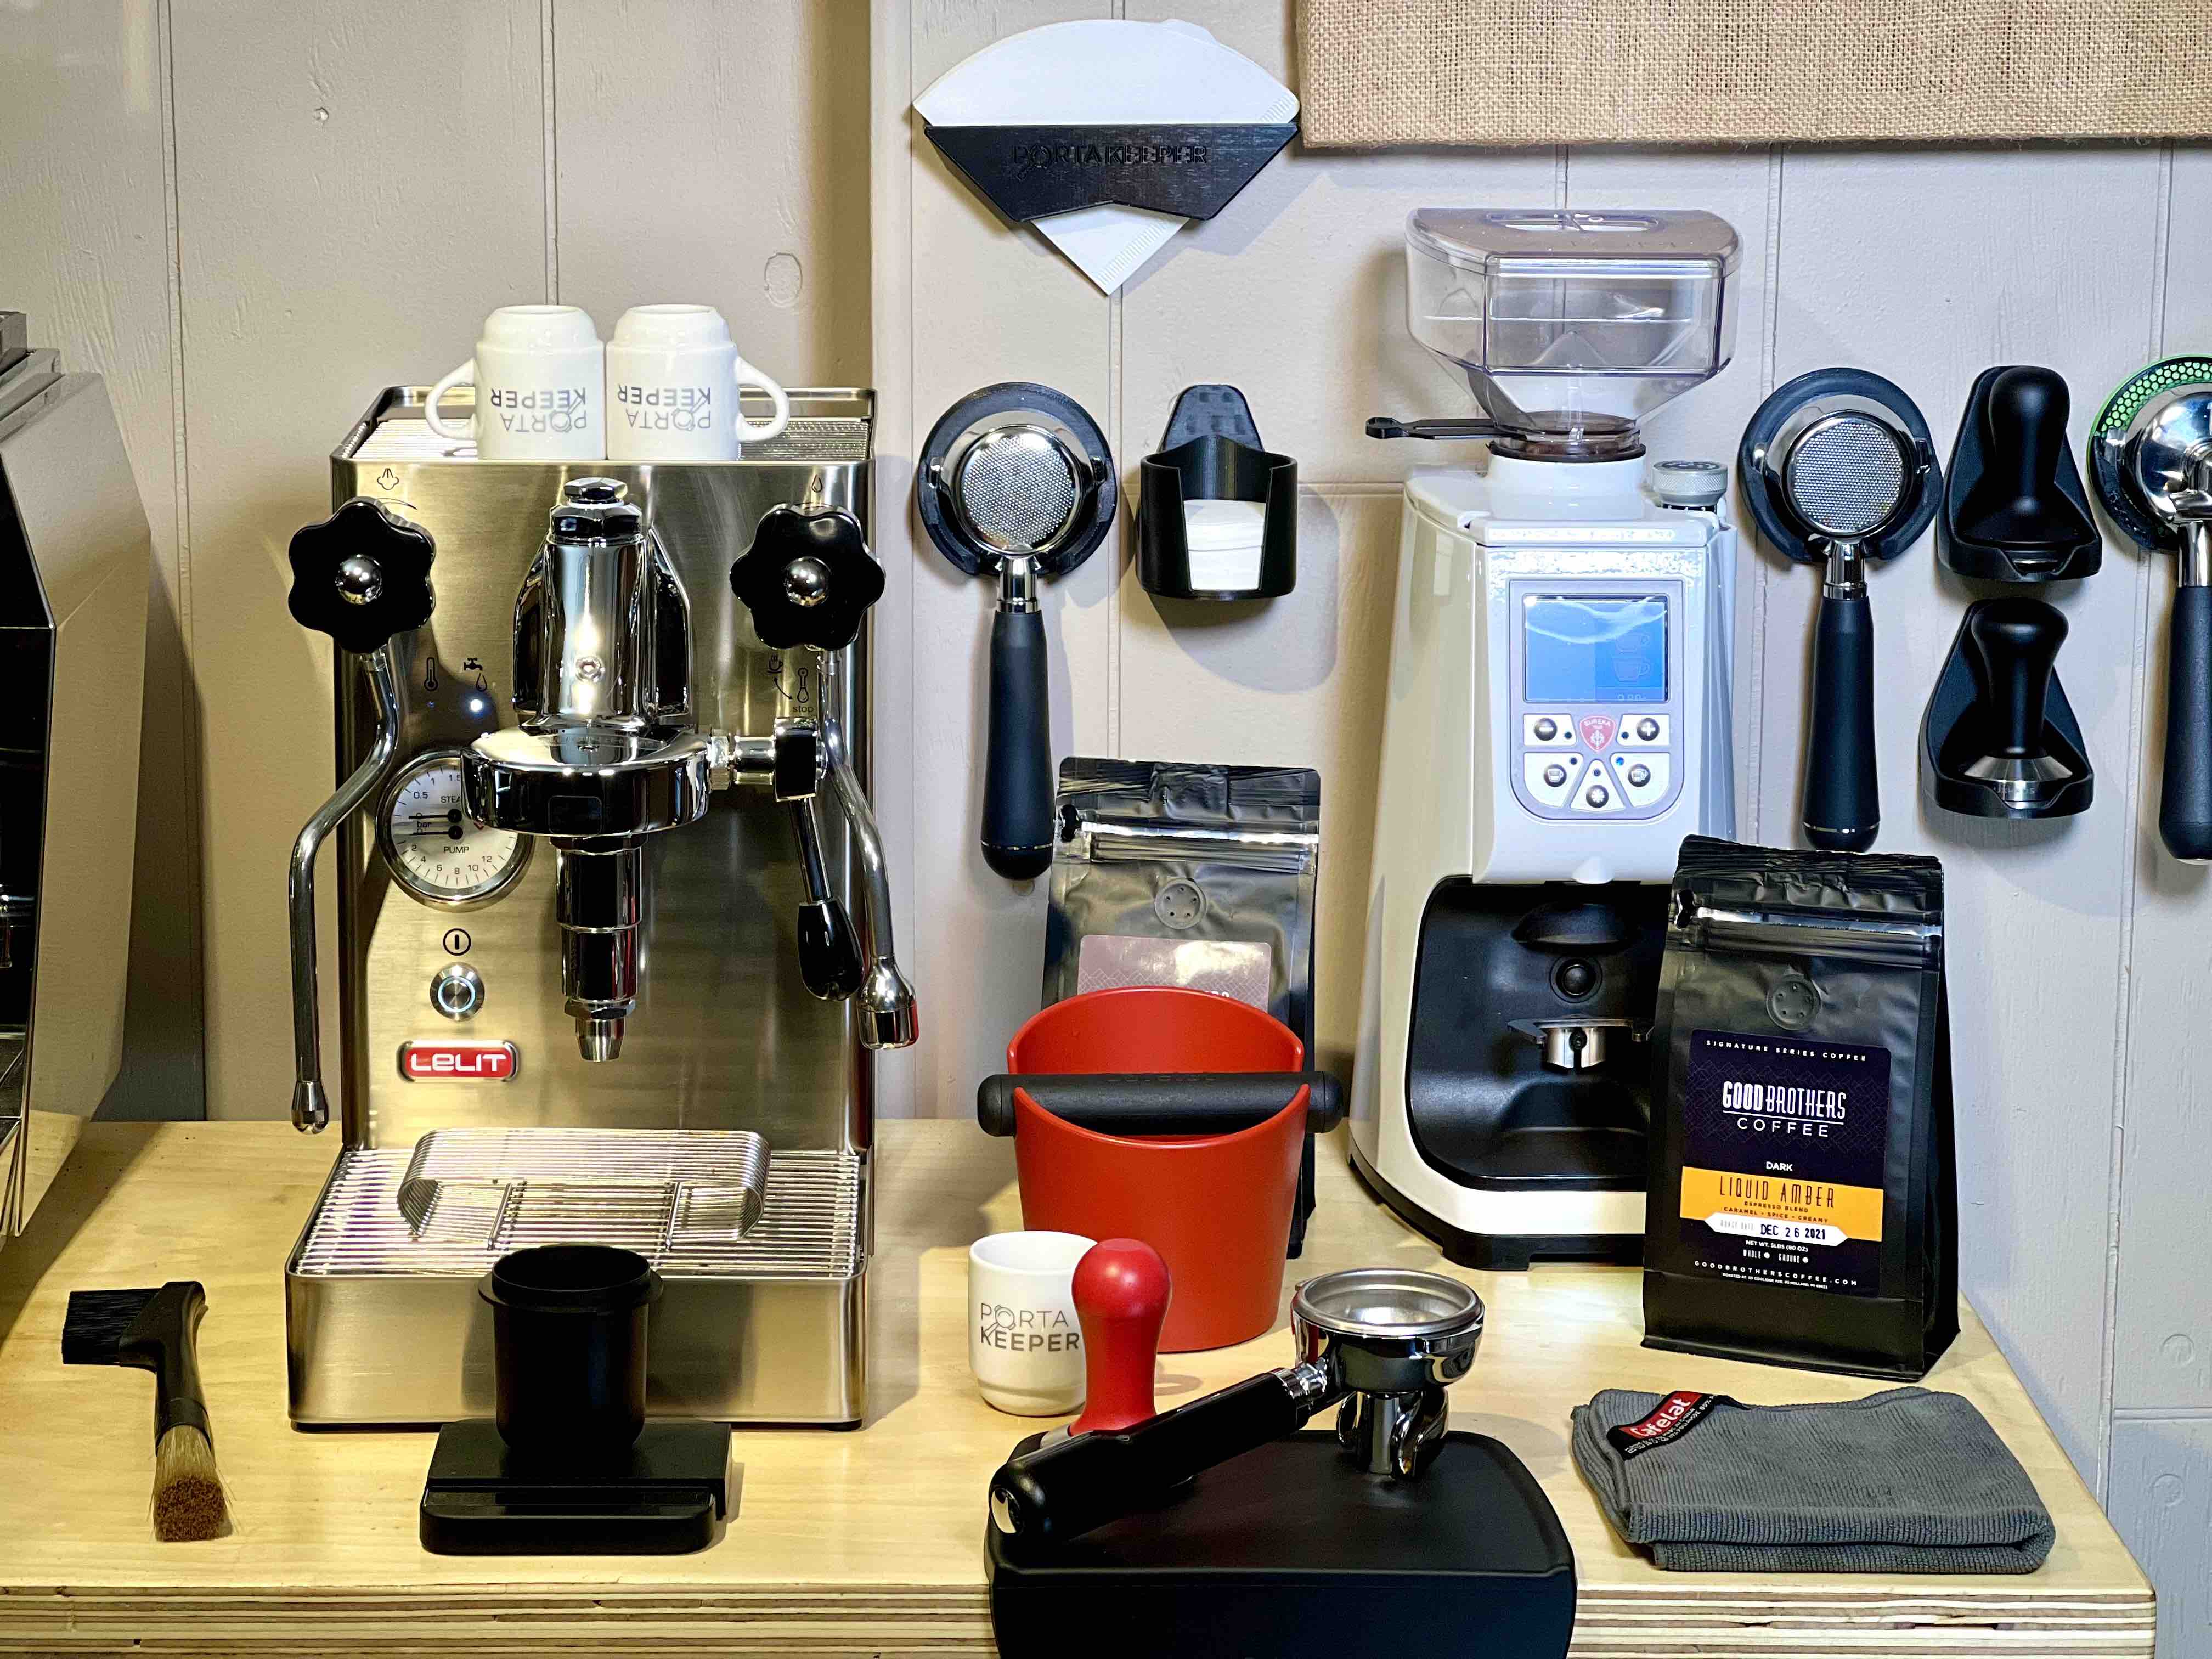 Lelit  Coffee Machines and Grinders